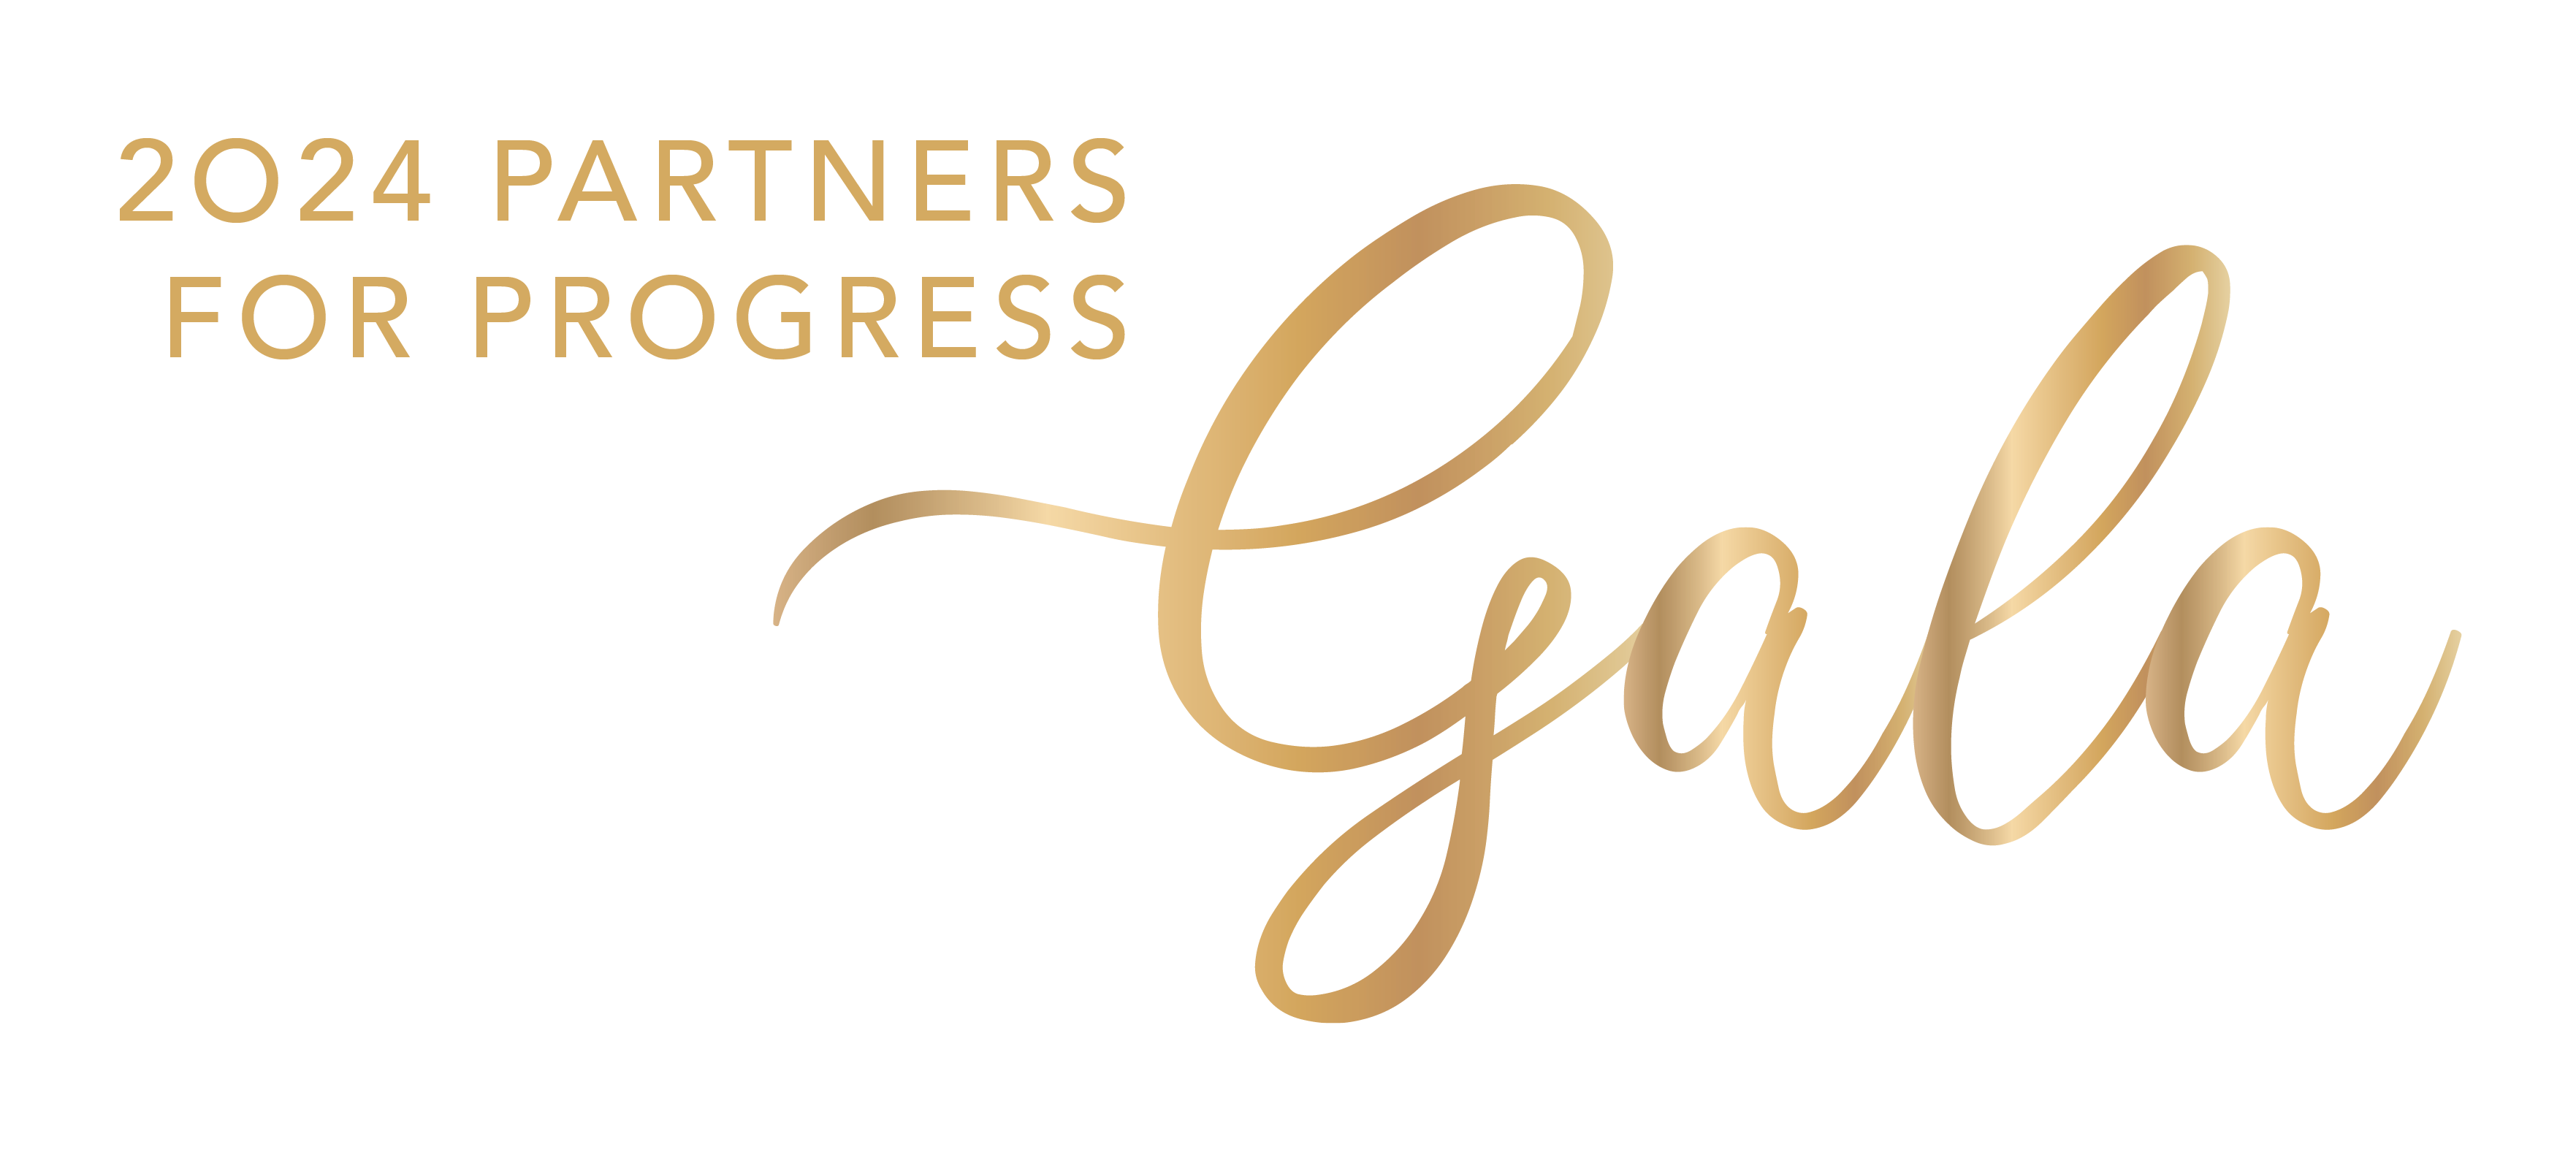 2024 Partners for Progress Gala